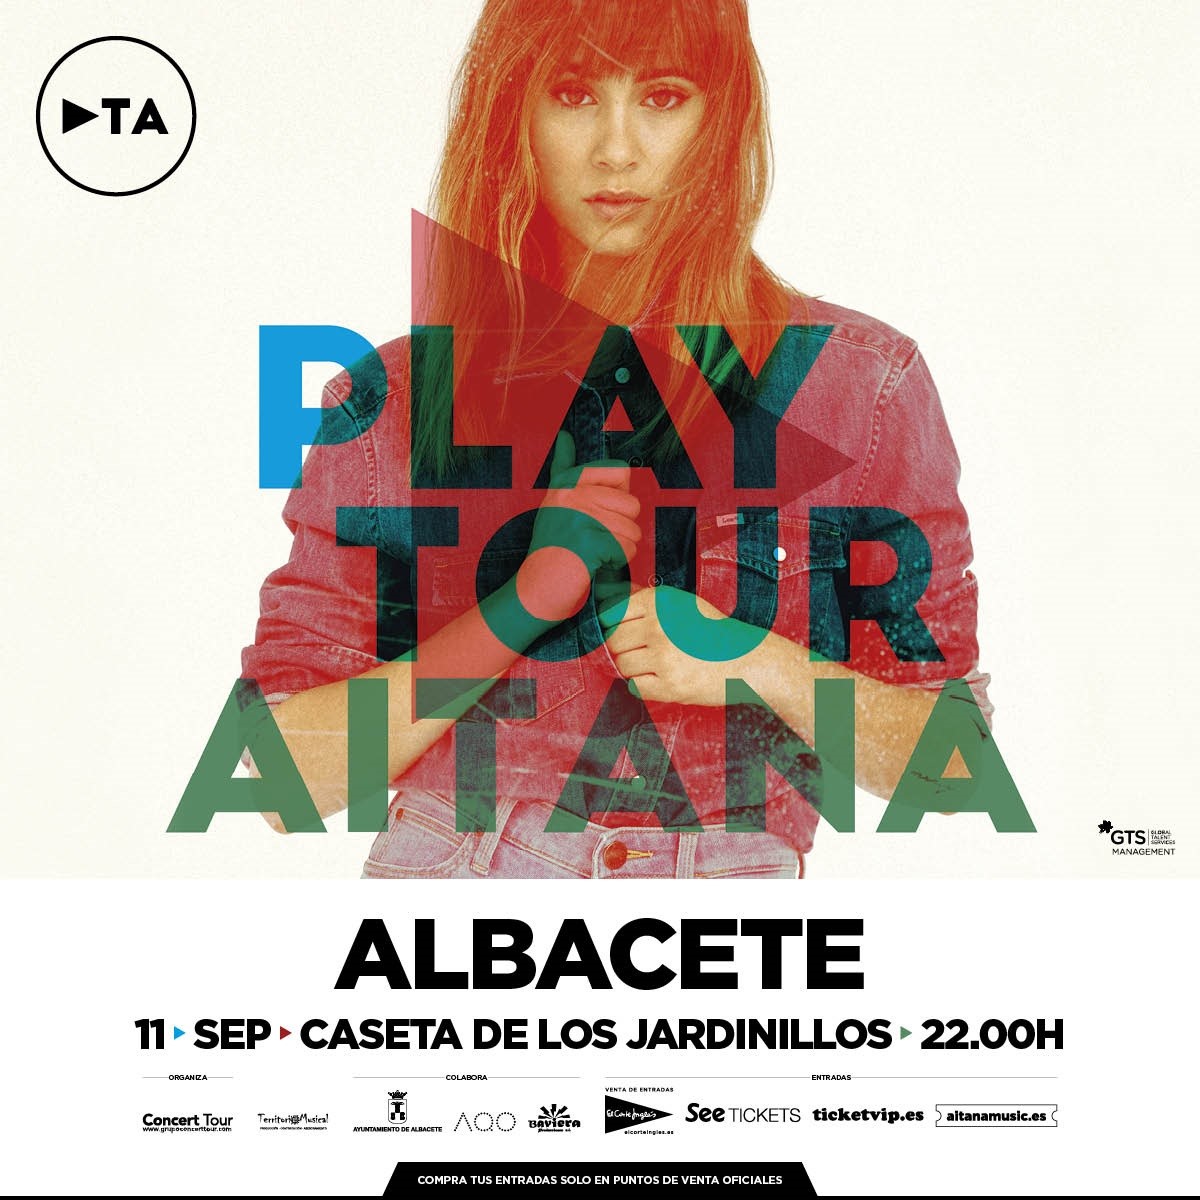 Cartel promocional de Aitana en la Feria de Albacete.